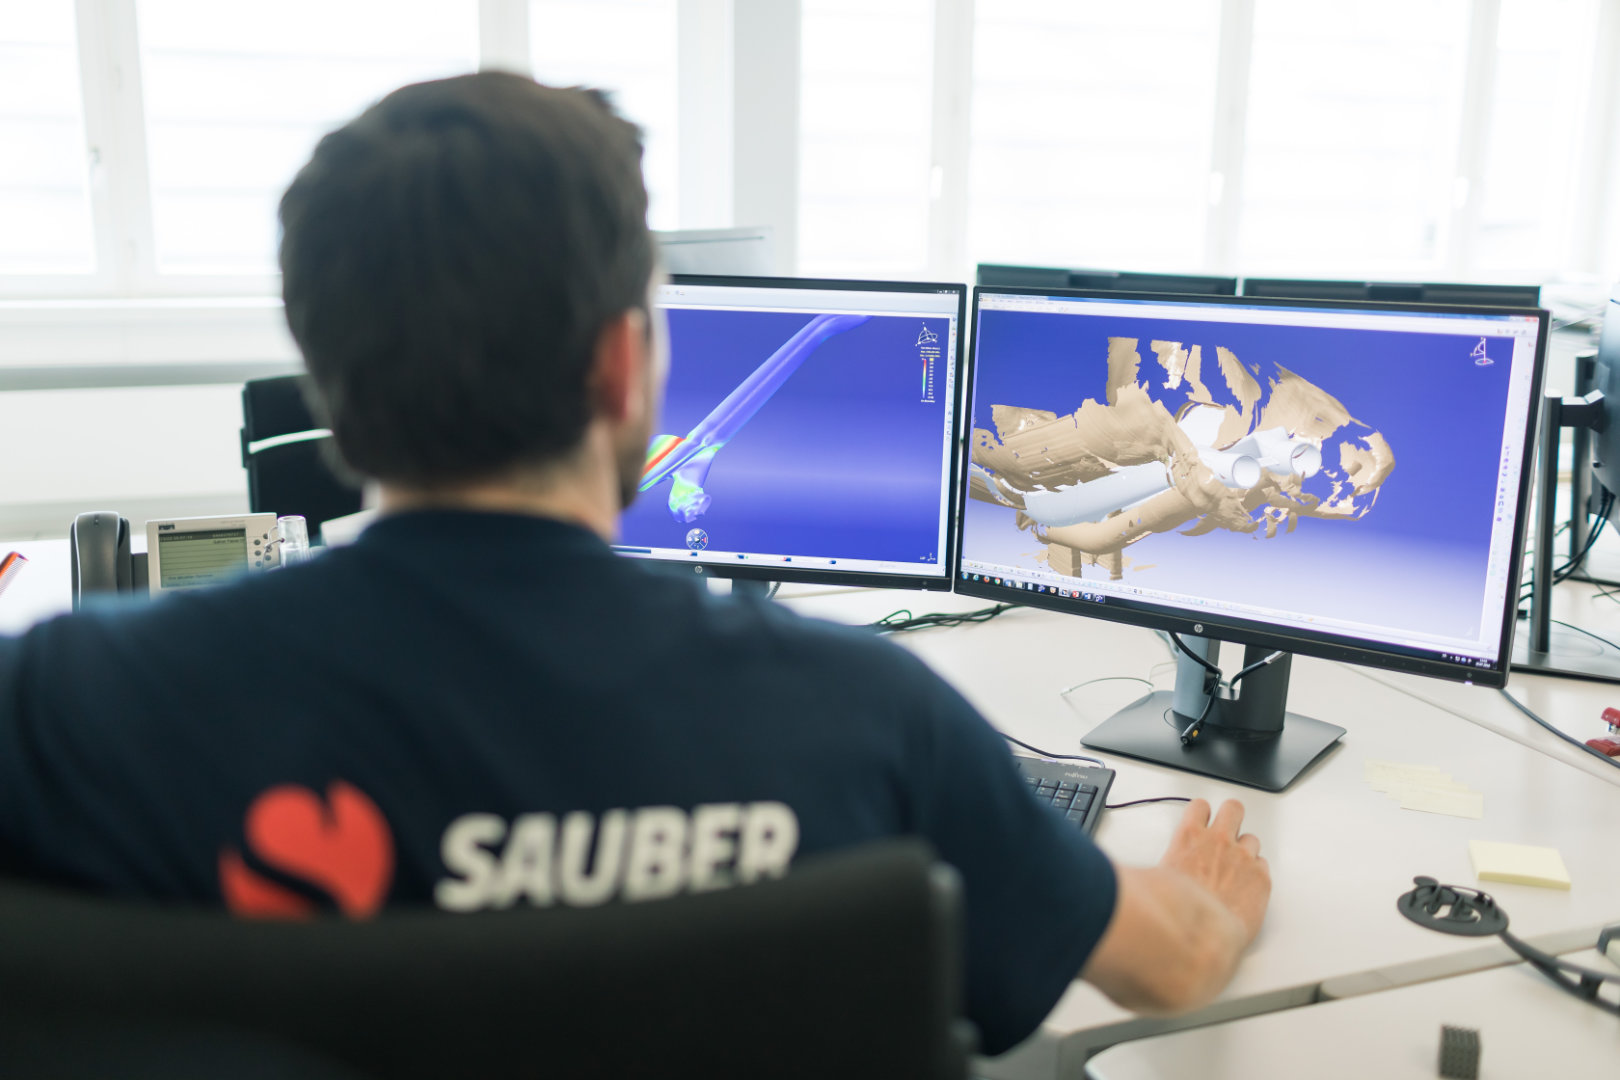 Sauber engineer sits in front of 2 screens